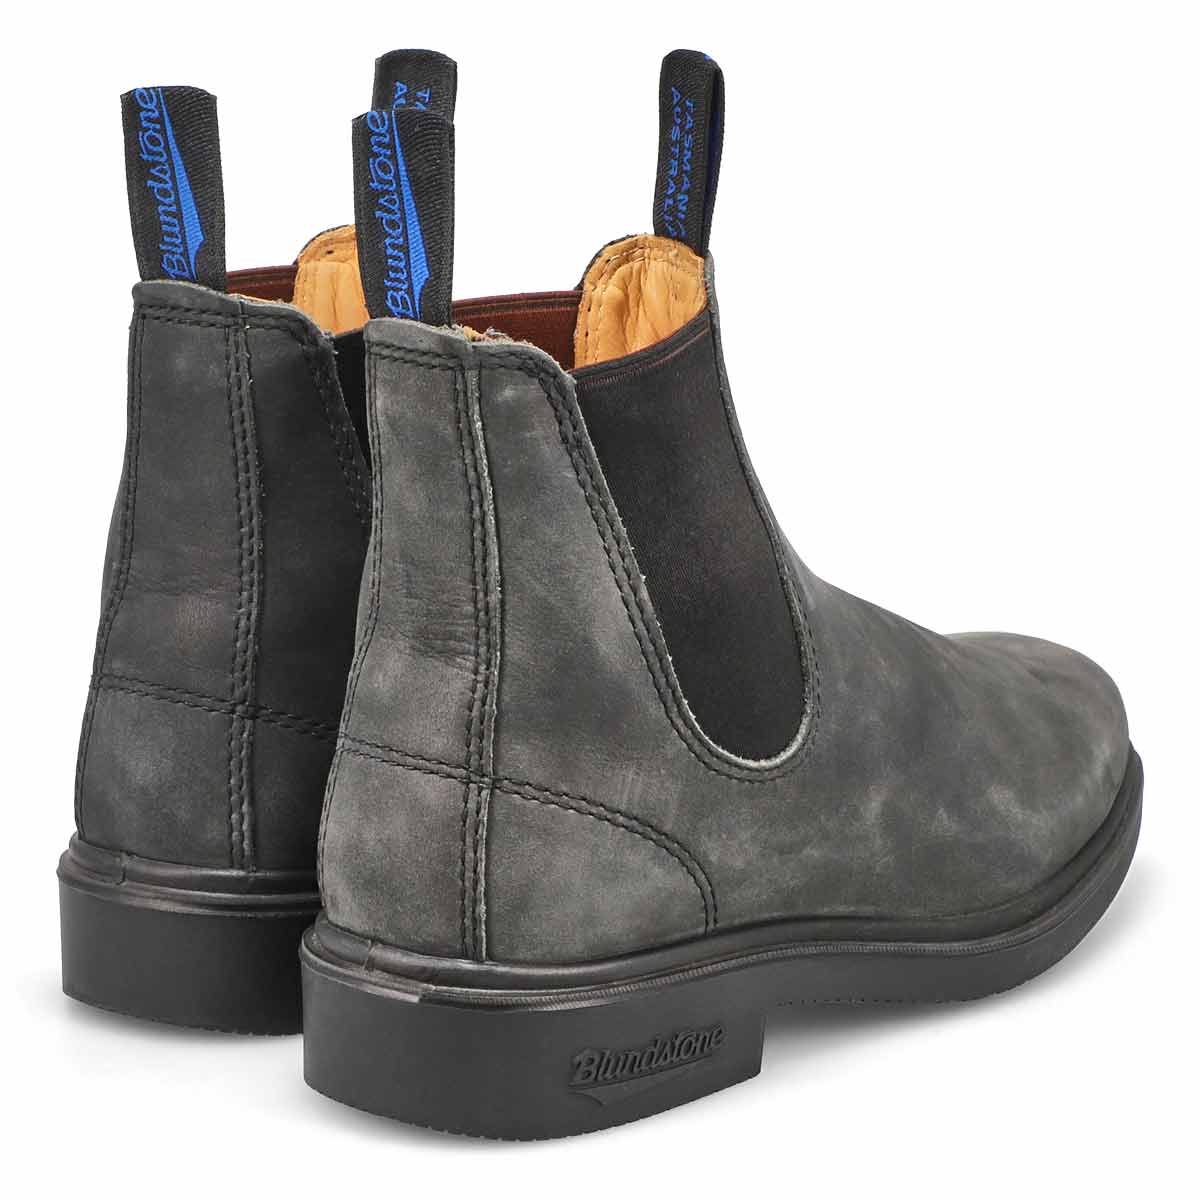 Unisex 1392 The Winter Chisel Toe Boot - Black